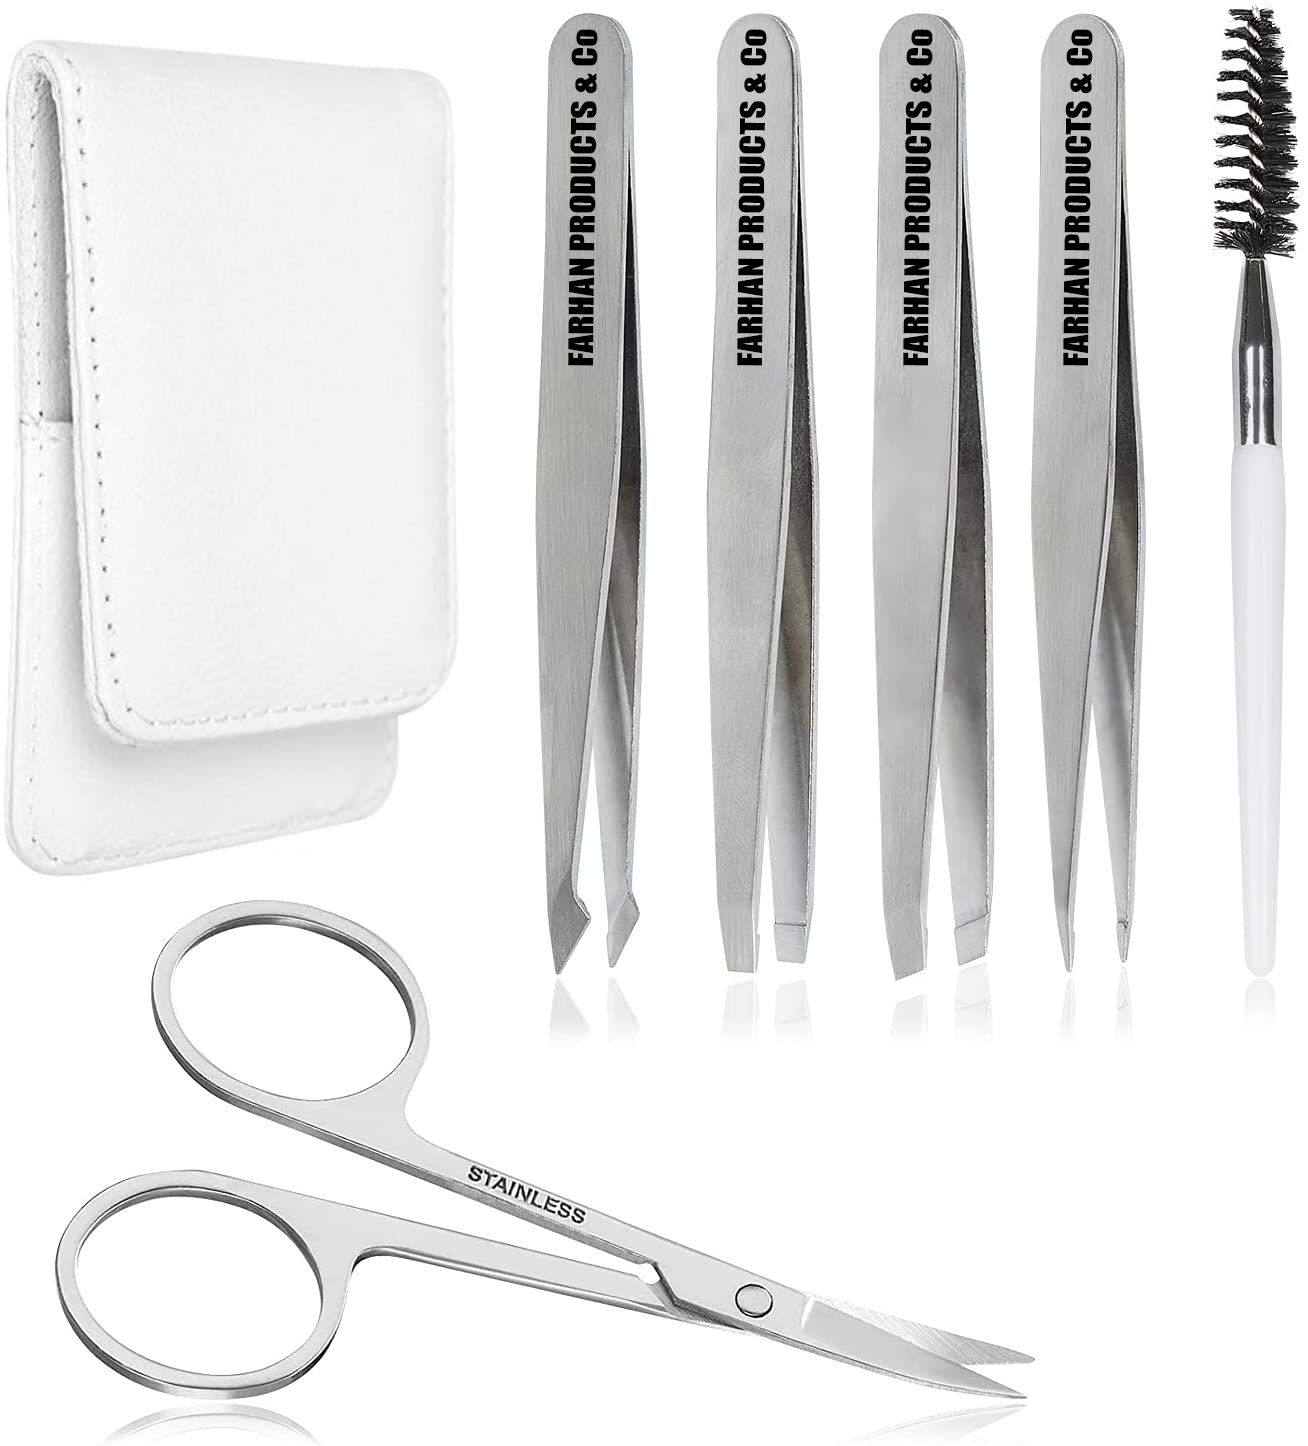 Eyebrow Tweezers Set Sliver Pack of 6 for Ingrown Facial Hair Removal Scissors Slant Pointed Tweezer Kit for Women's & Men's